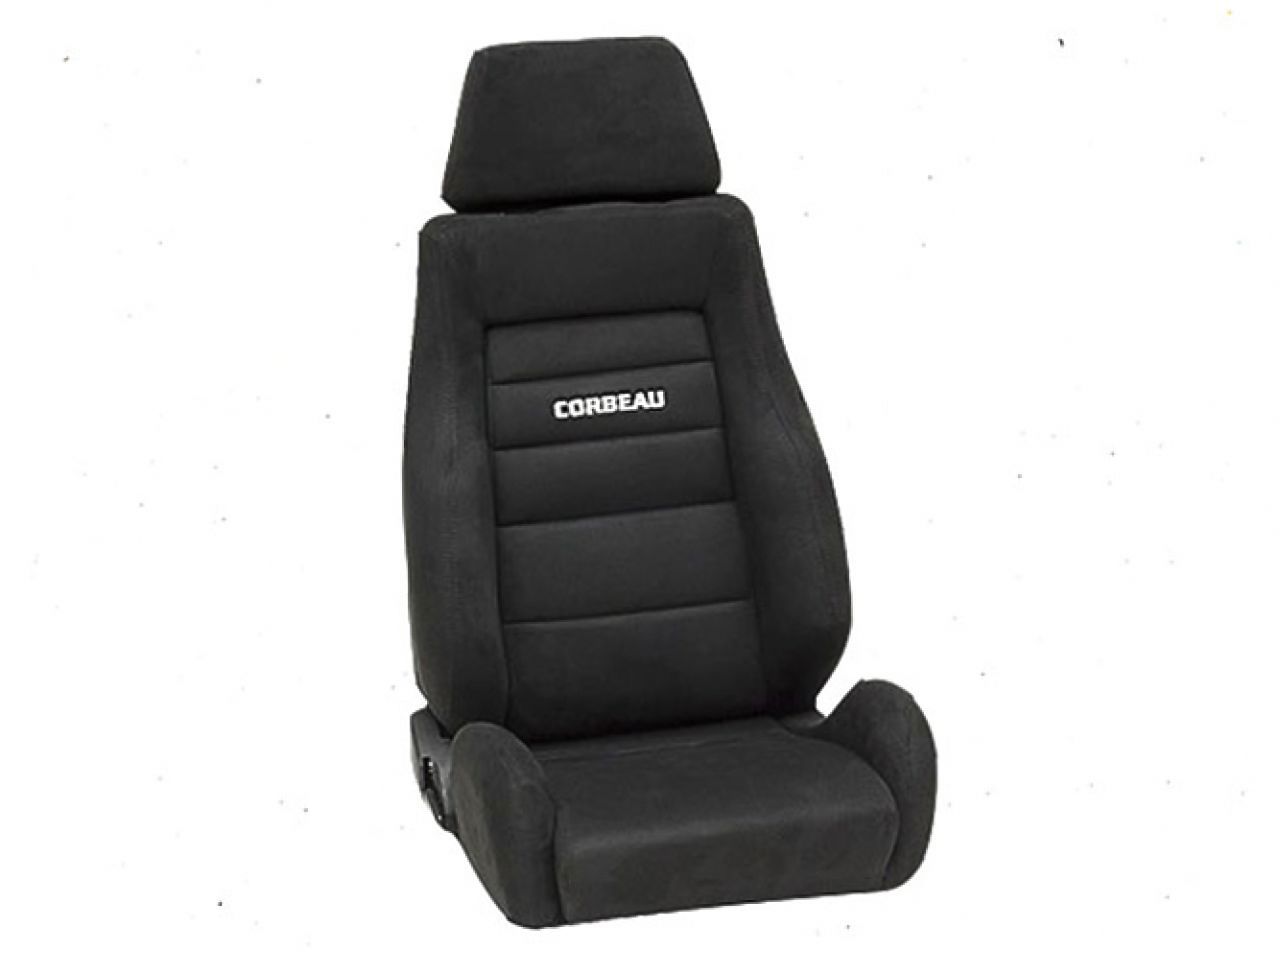 Corbeau Reclinable Seat S20301PR Item Image